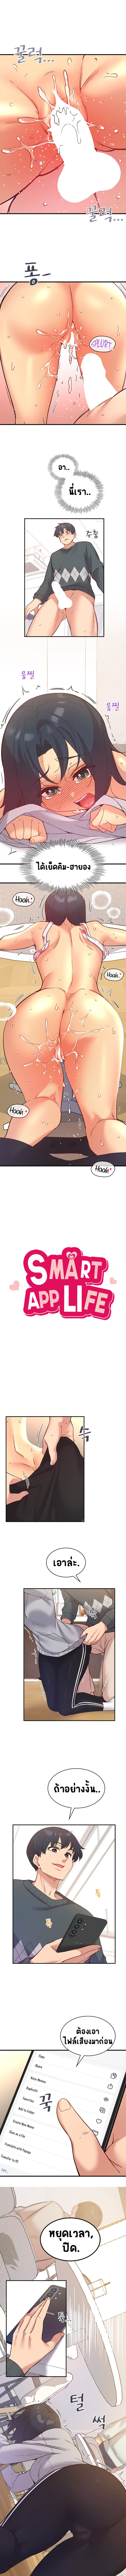 Smart App Life 25 (1)